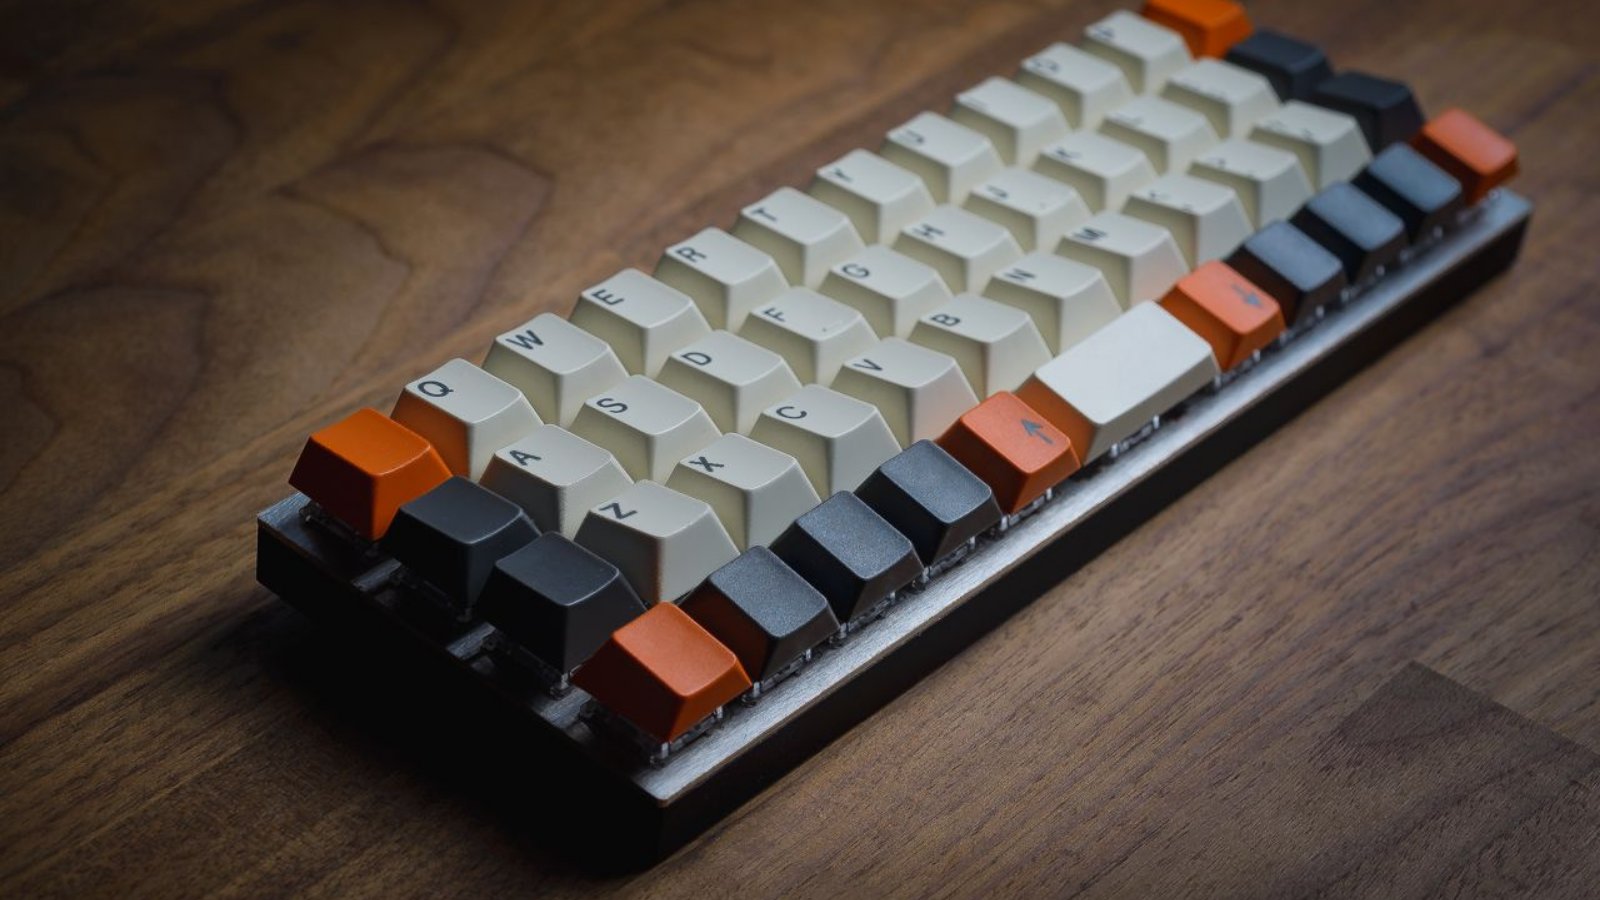 YMDK Carbon keycap set planck ortho keyboard